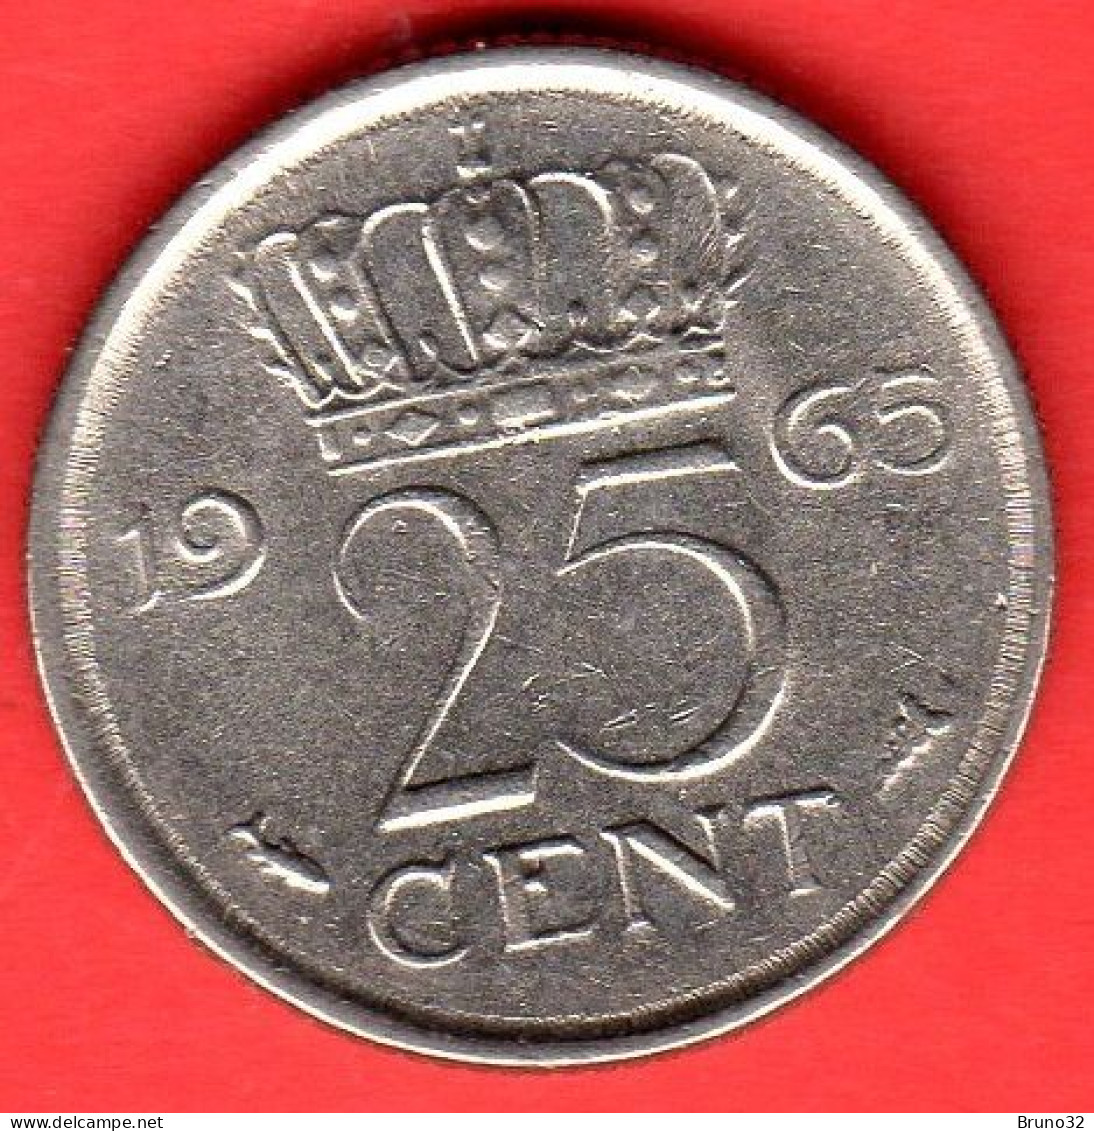 Paesi Bassi - Nederland - Pays Bas - 1965 - 25 Cents - QFDC/aUNC - Come Da Foto - 1948-1980 : Juliana